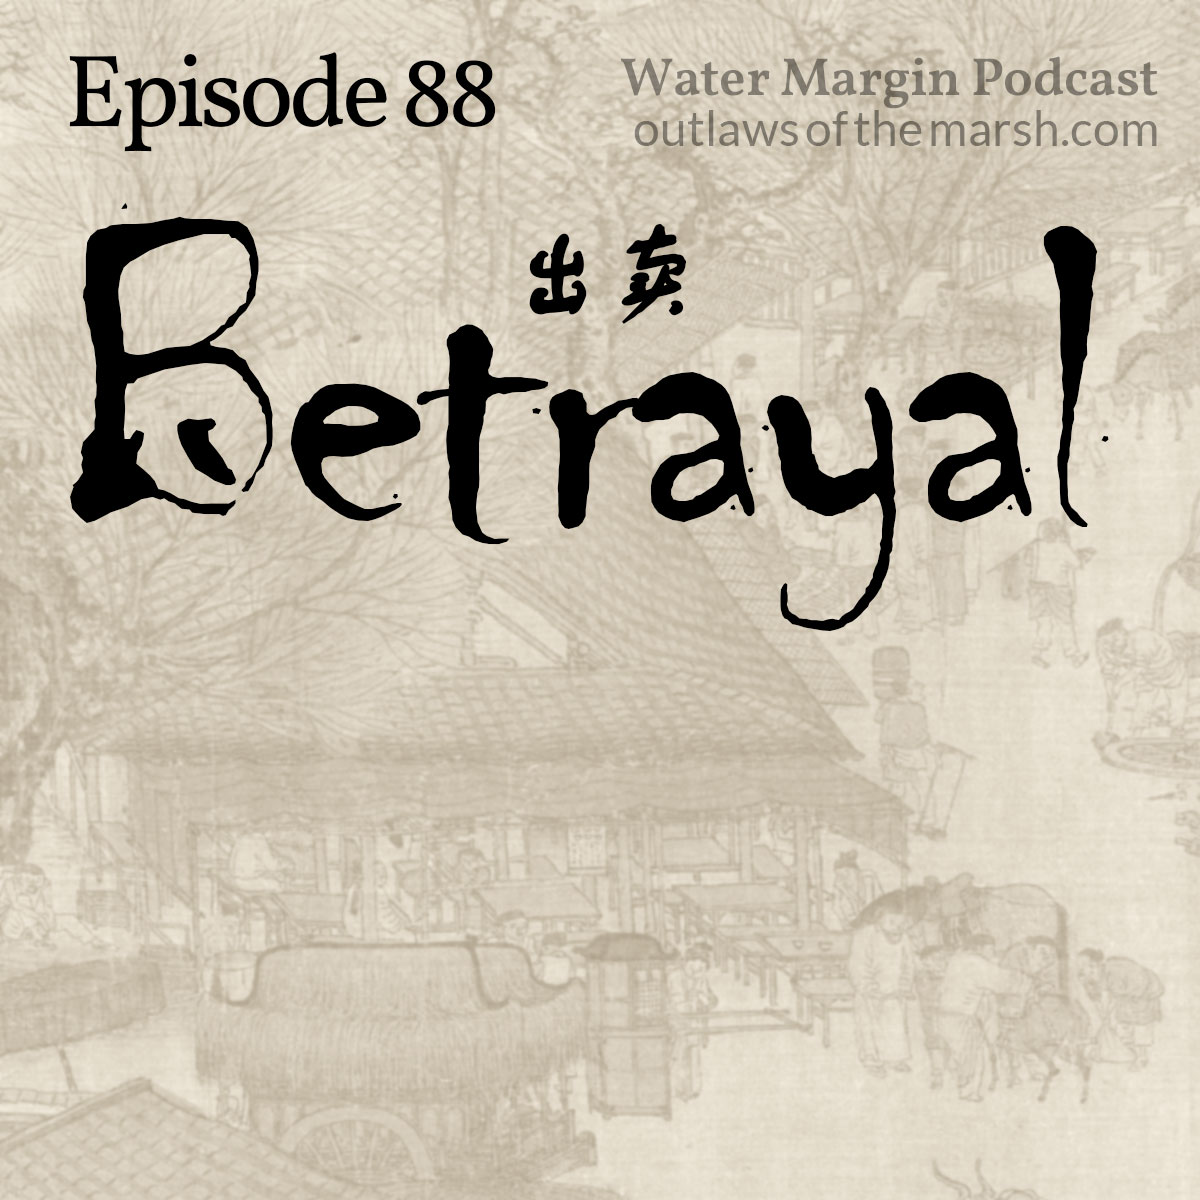 Water Margin Podcast: Episode 088